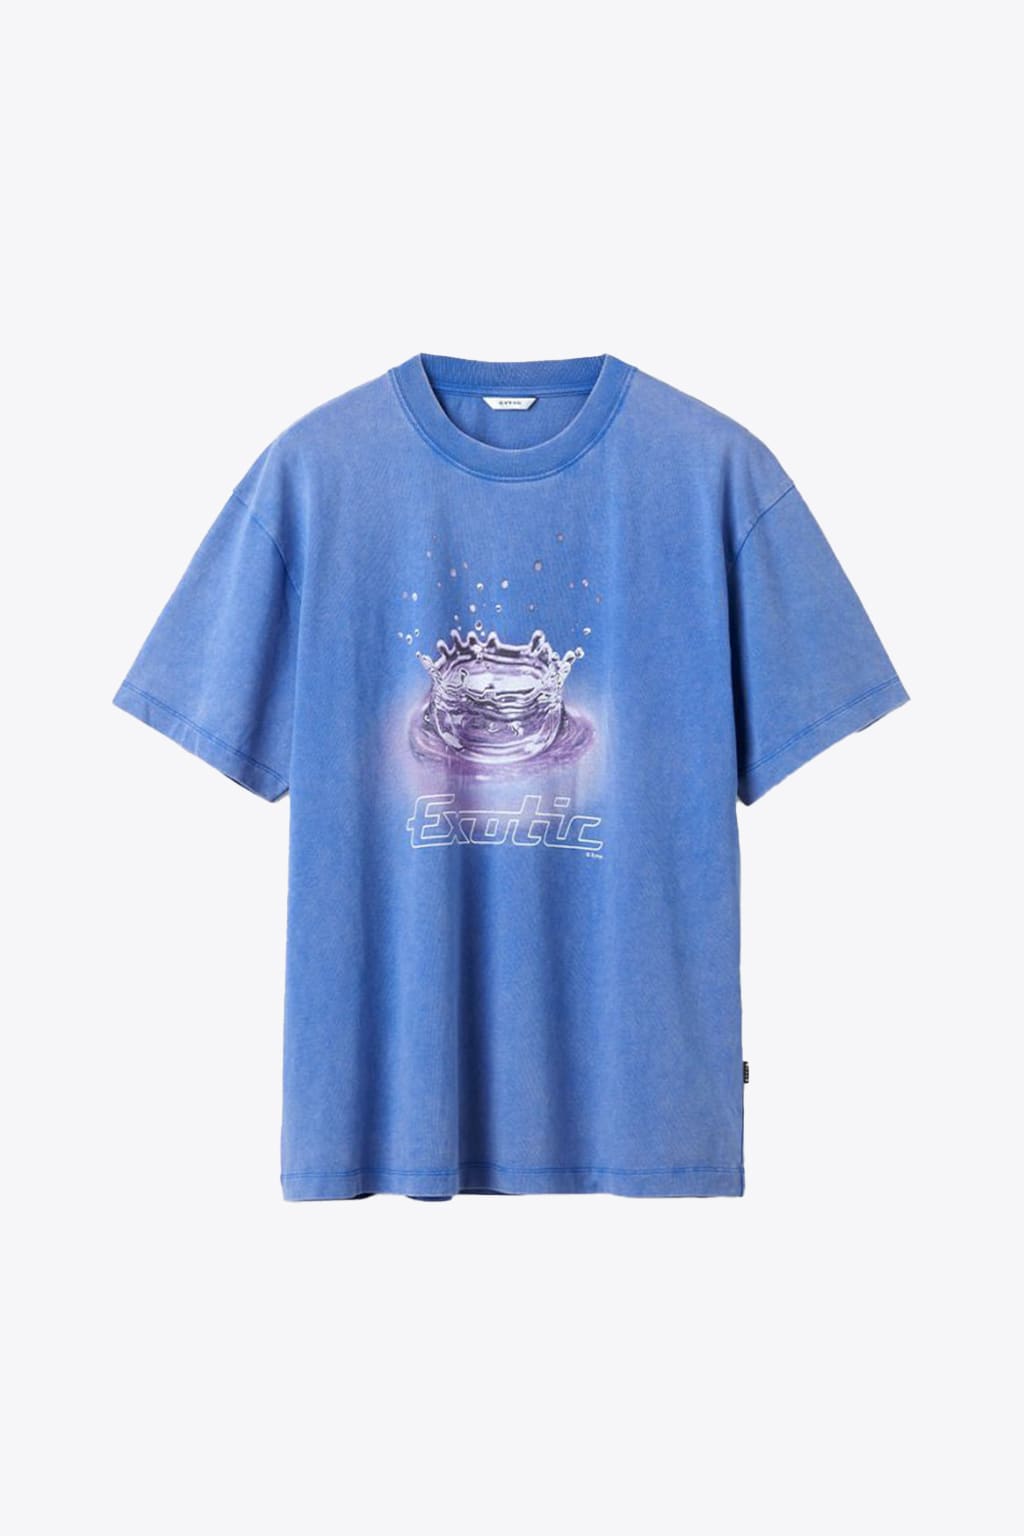 Eytys Jay Splash Light blue cotton t-shirt with front print - Jay splash